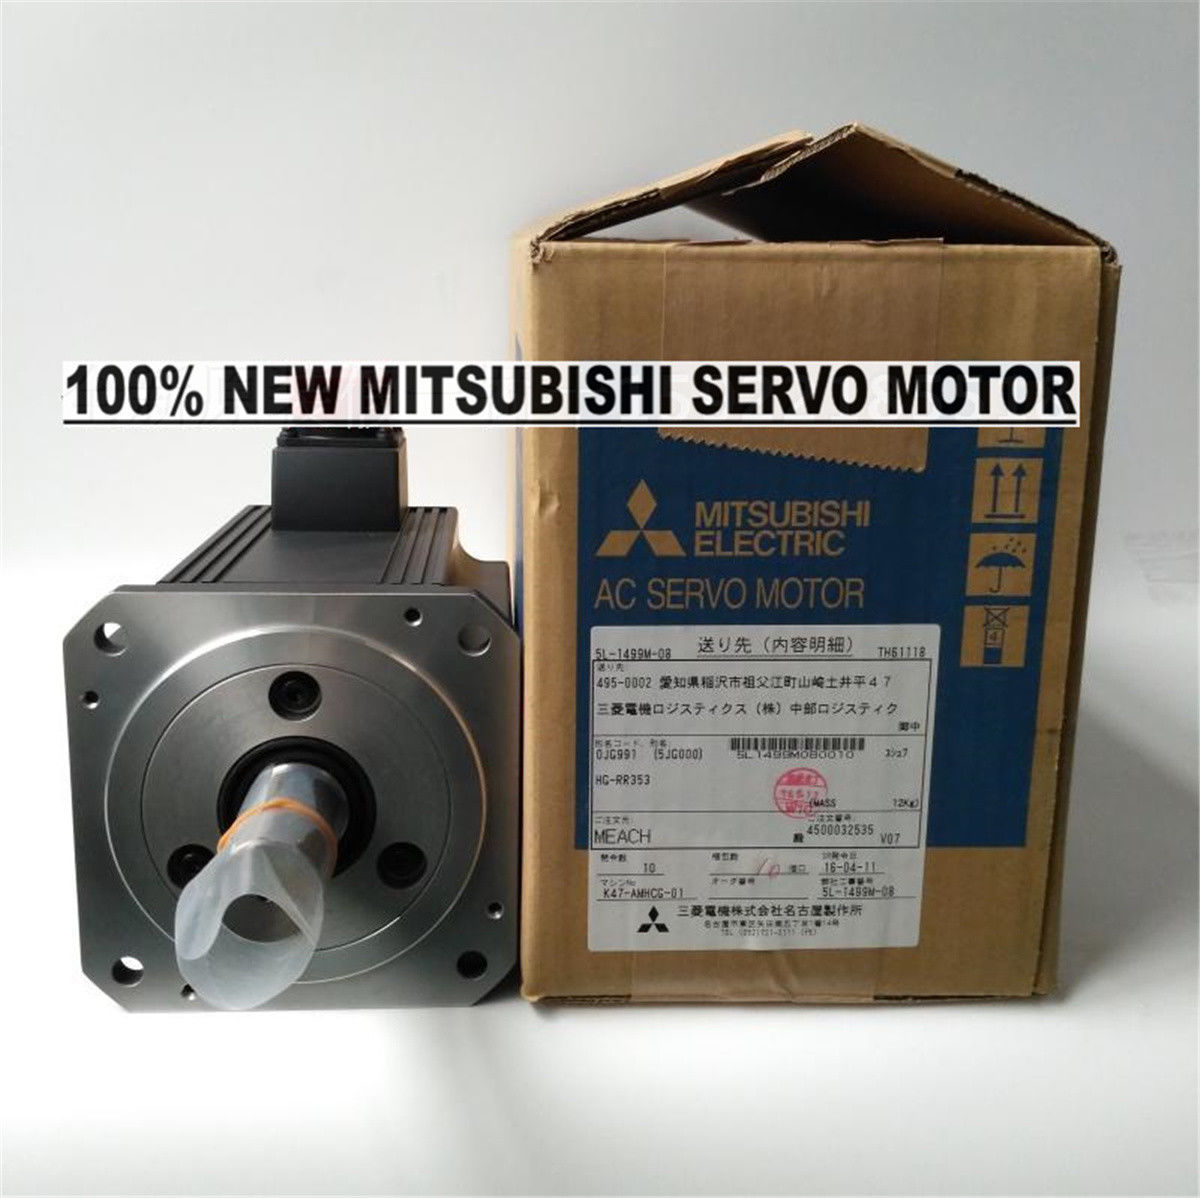 NEW Mitsubishi Servo Motor HG-RR353 in box HGRR353